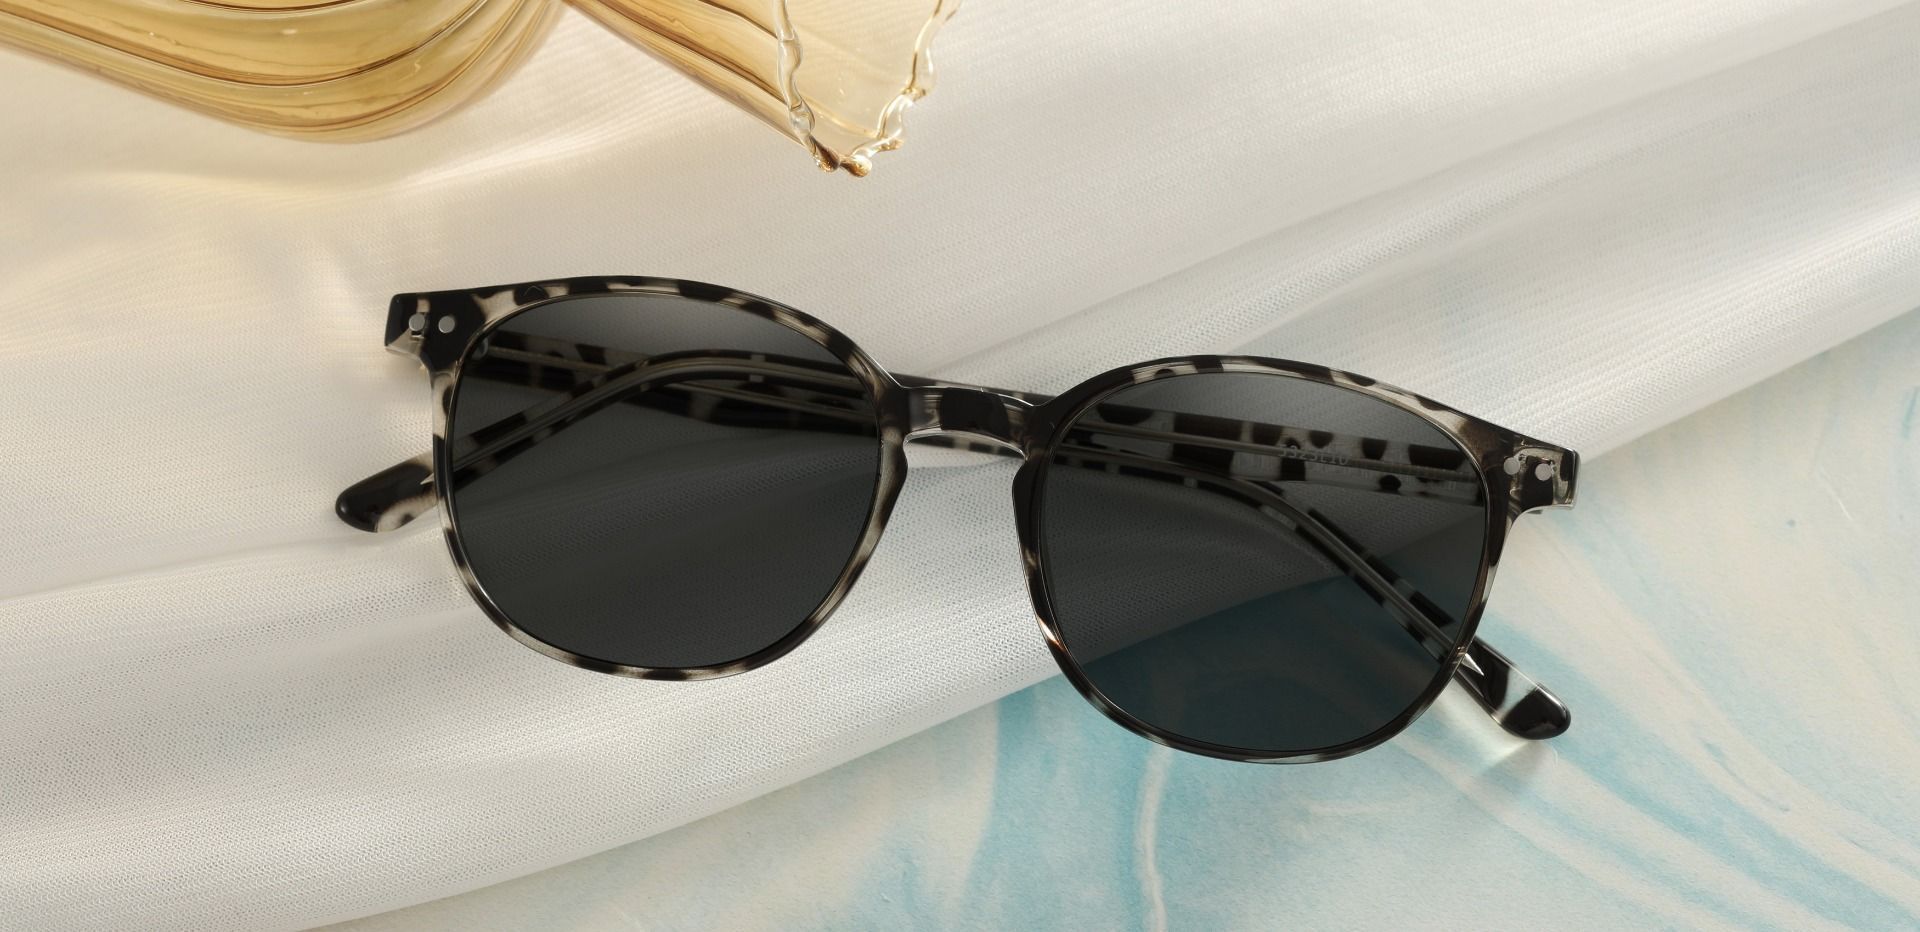 Holstein Oval Prescription Sunglasses - Leopard Frame With Gray Lenses